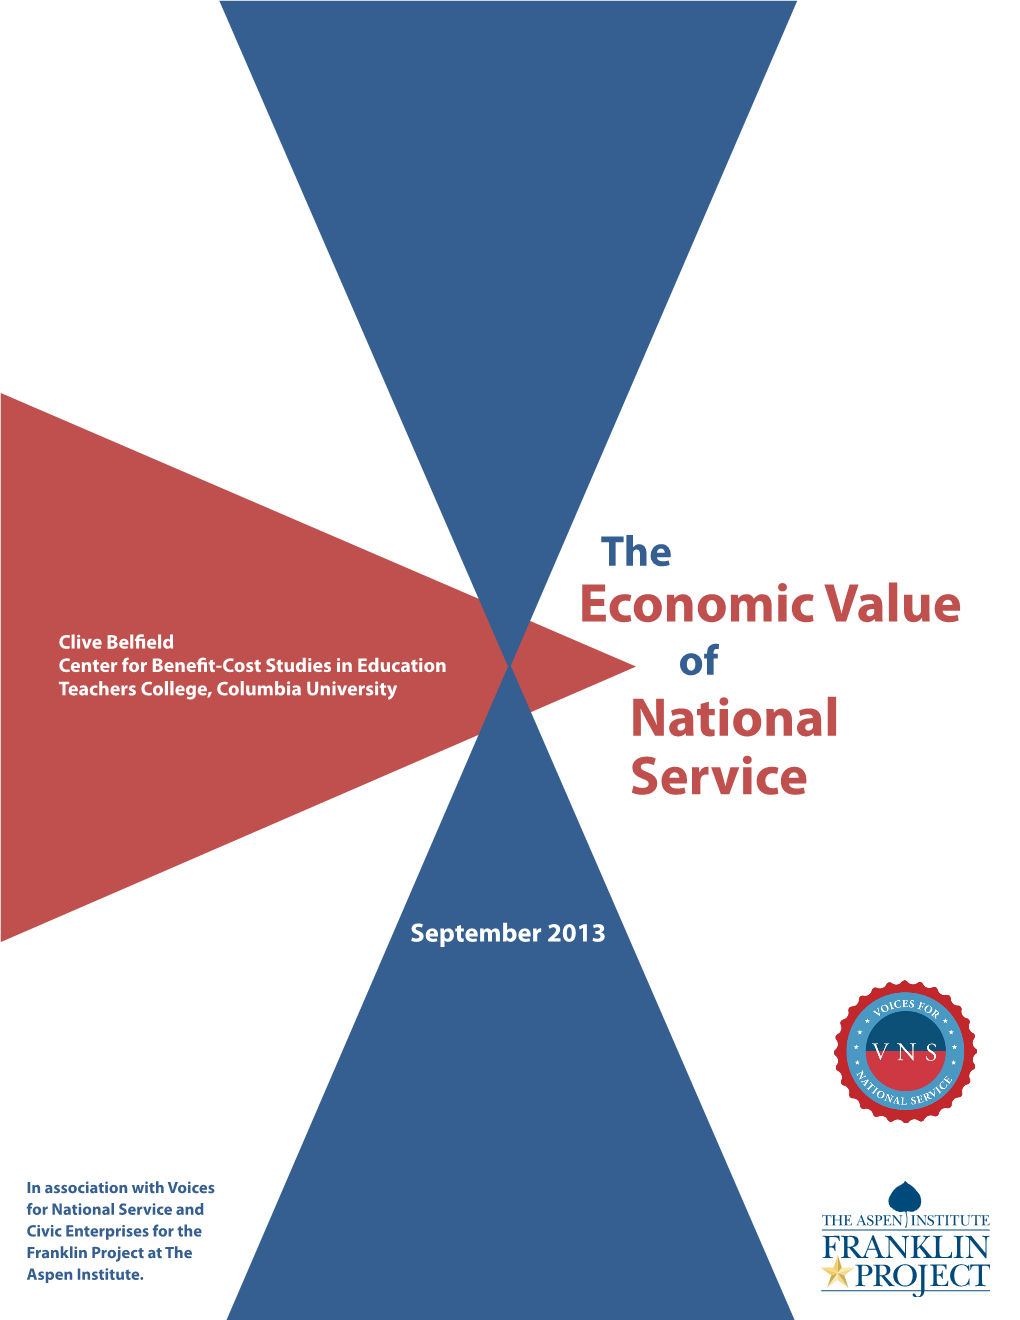 National Service Economic Value